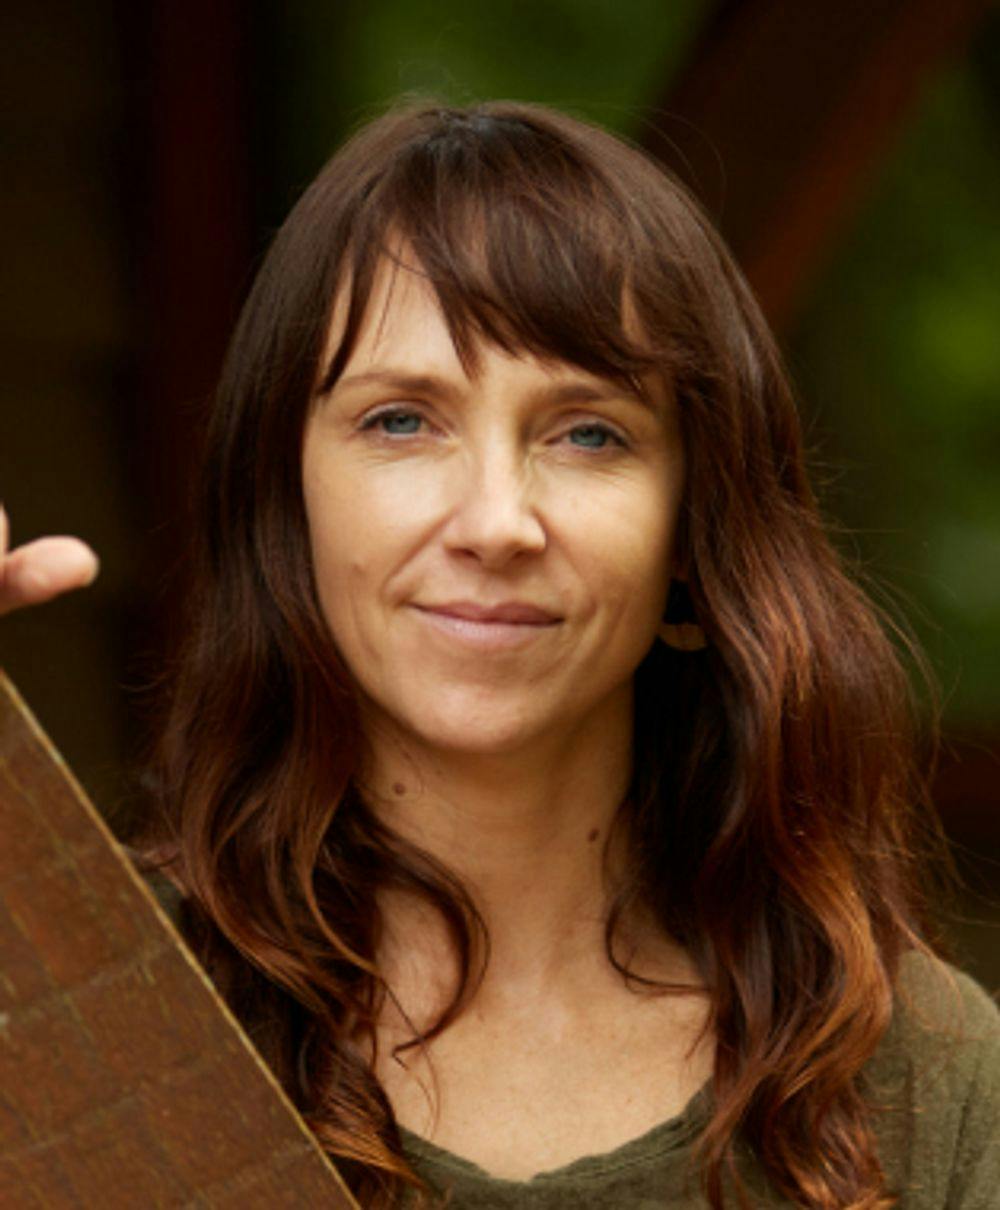 Melli O'Brien - Mindfulness and meditation teacher, speaker, and co-founder of Mindfulness.com.